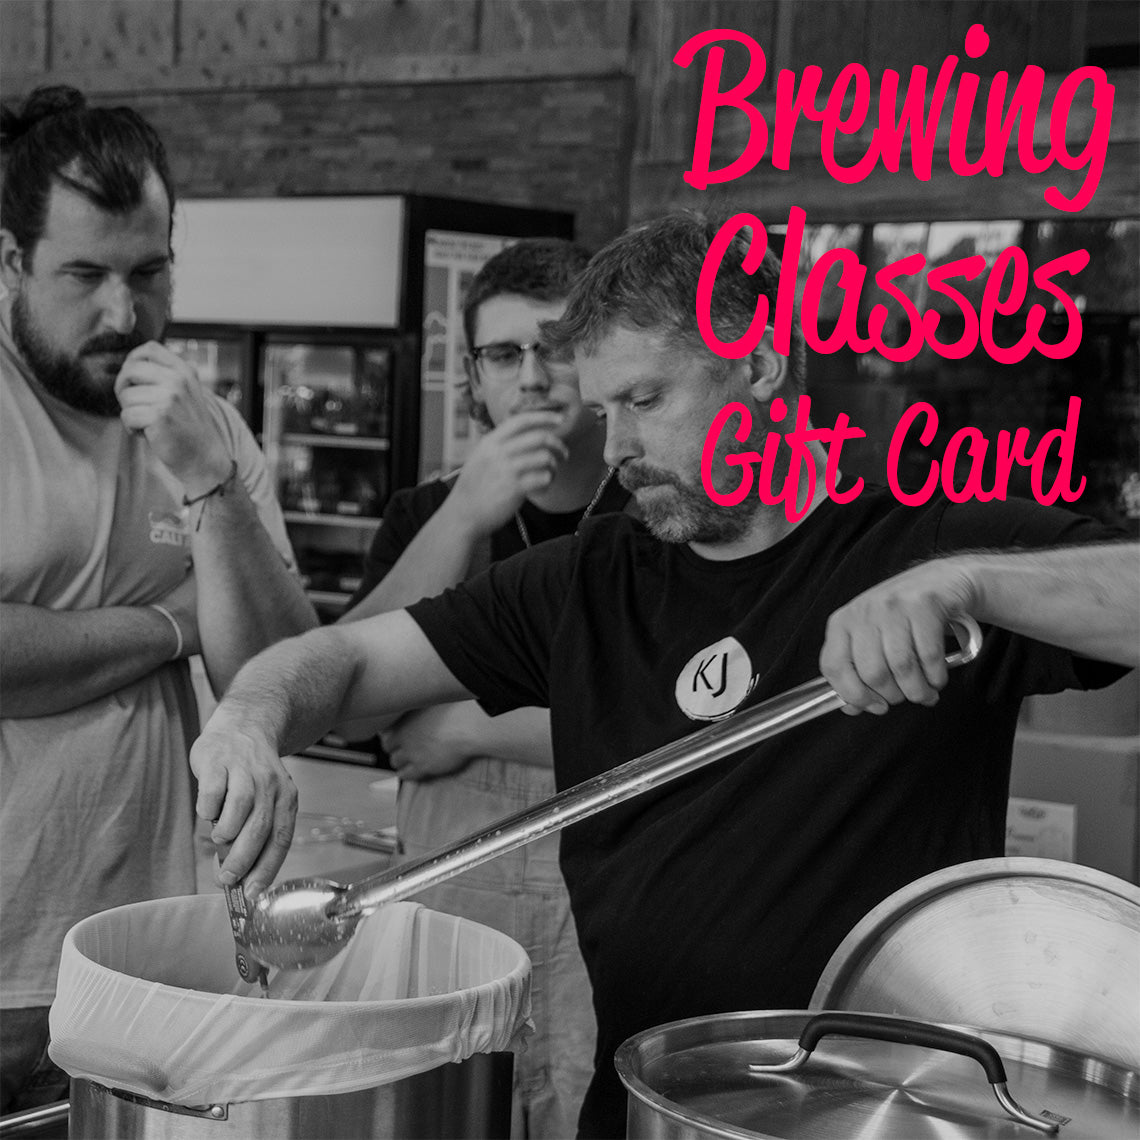 Brewing Class Gift Card